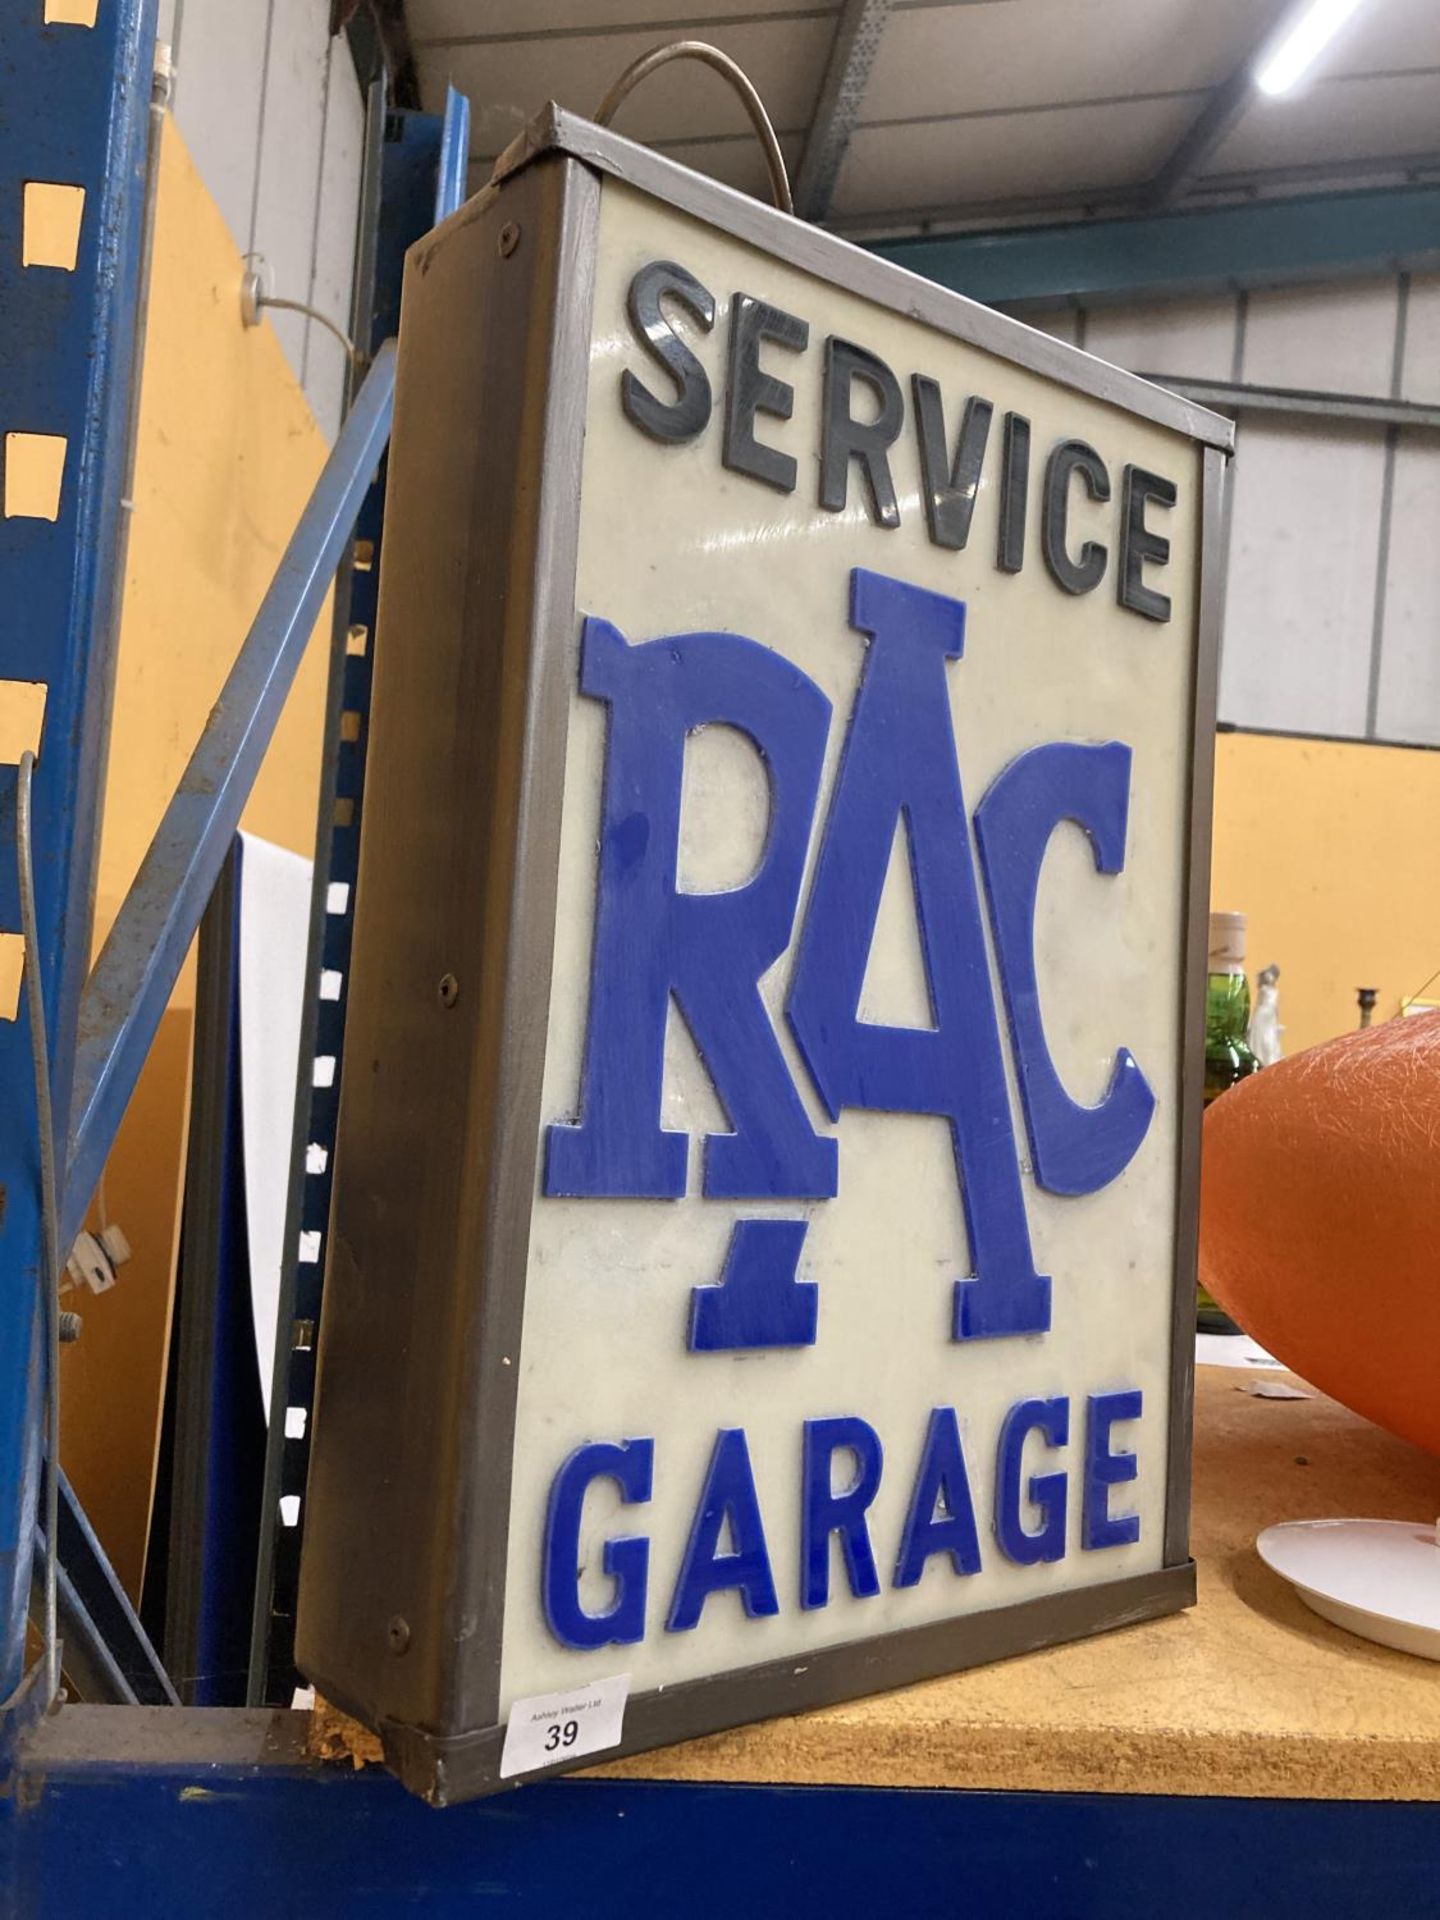 AN RAC SERVICE GARAGE ILLUMINATED LIGHT BOX SIGN - Image 2 of 2